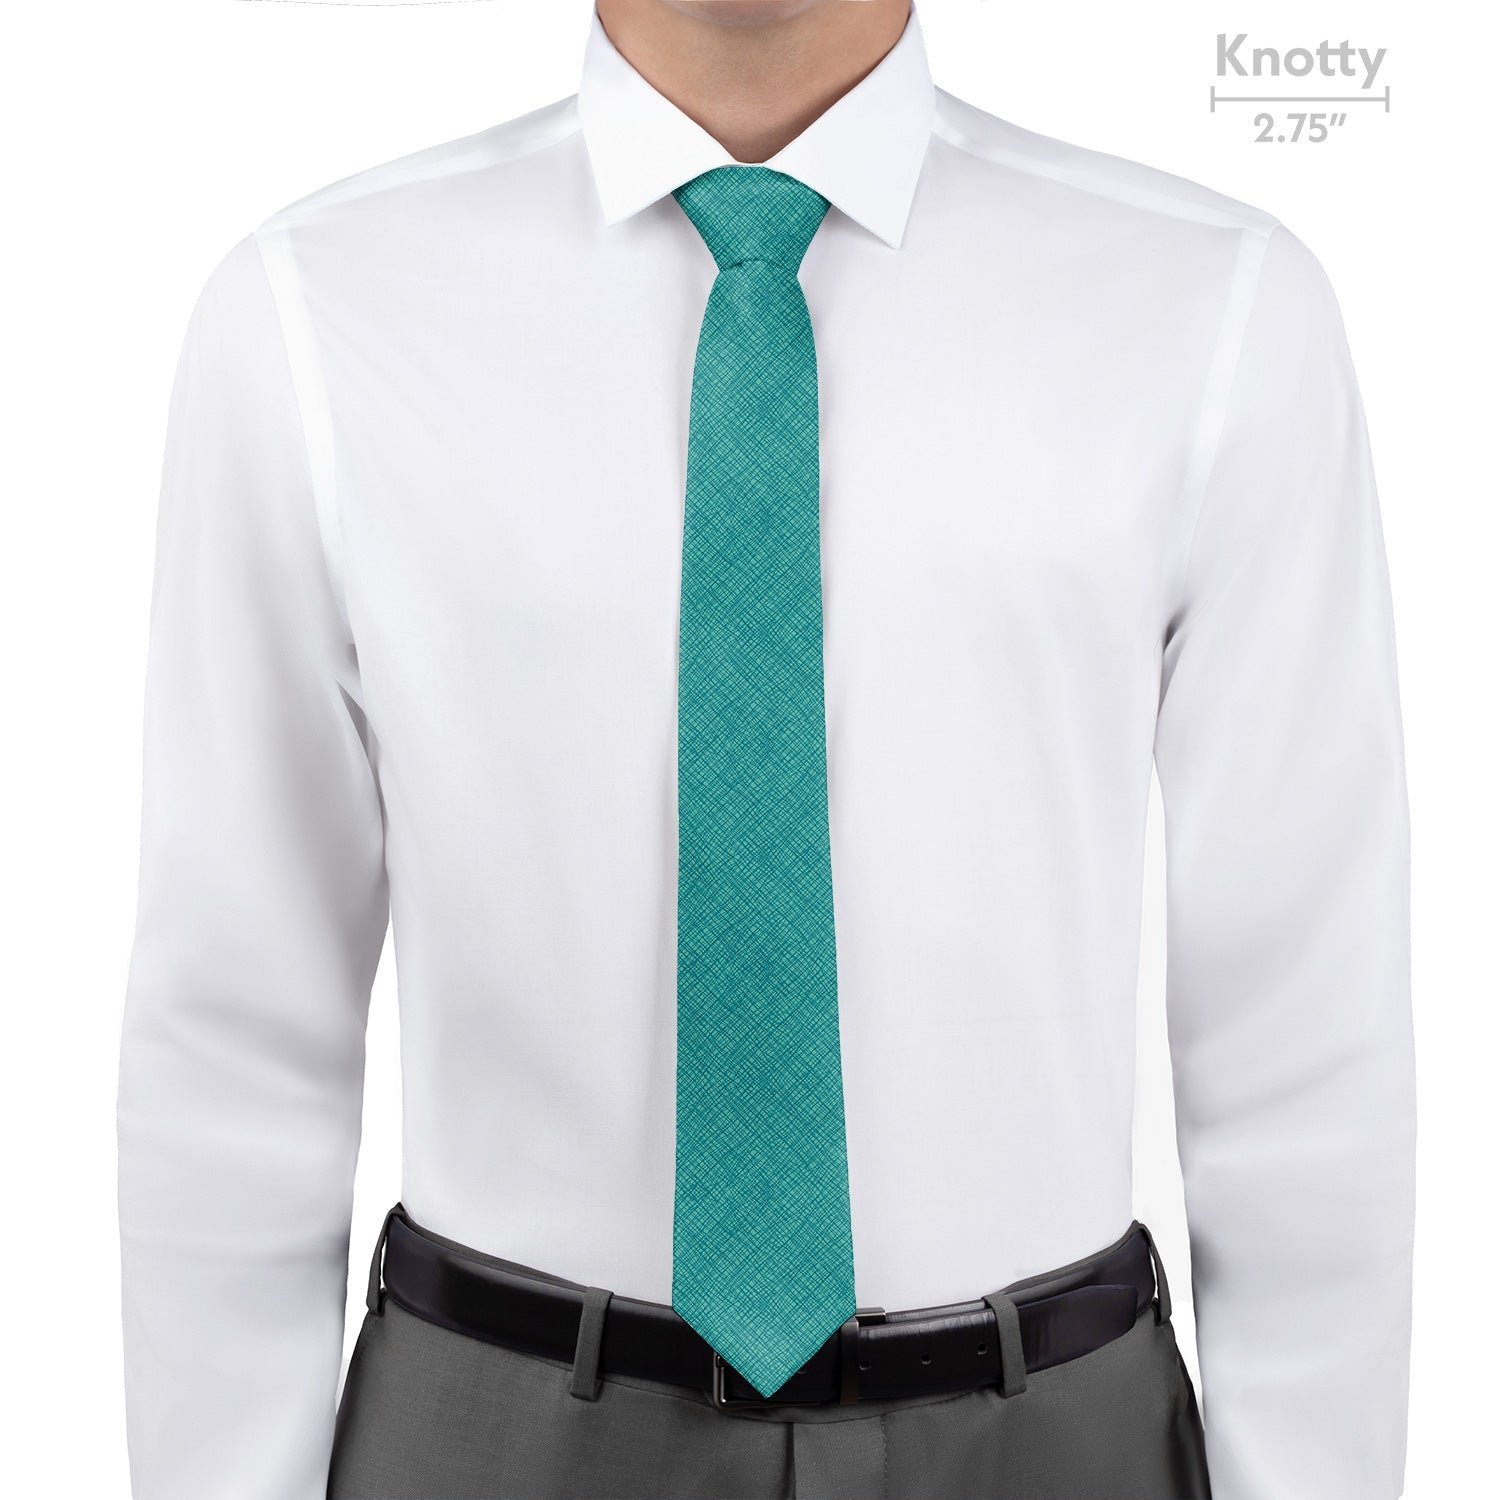 Burlap Crosshatch Necktie - Knotty - Knotty Tie Co.